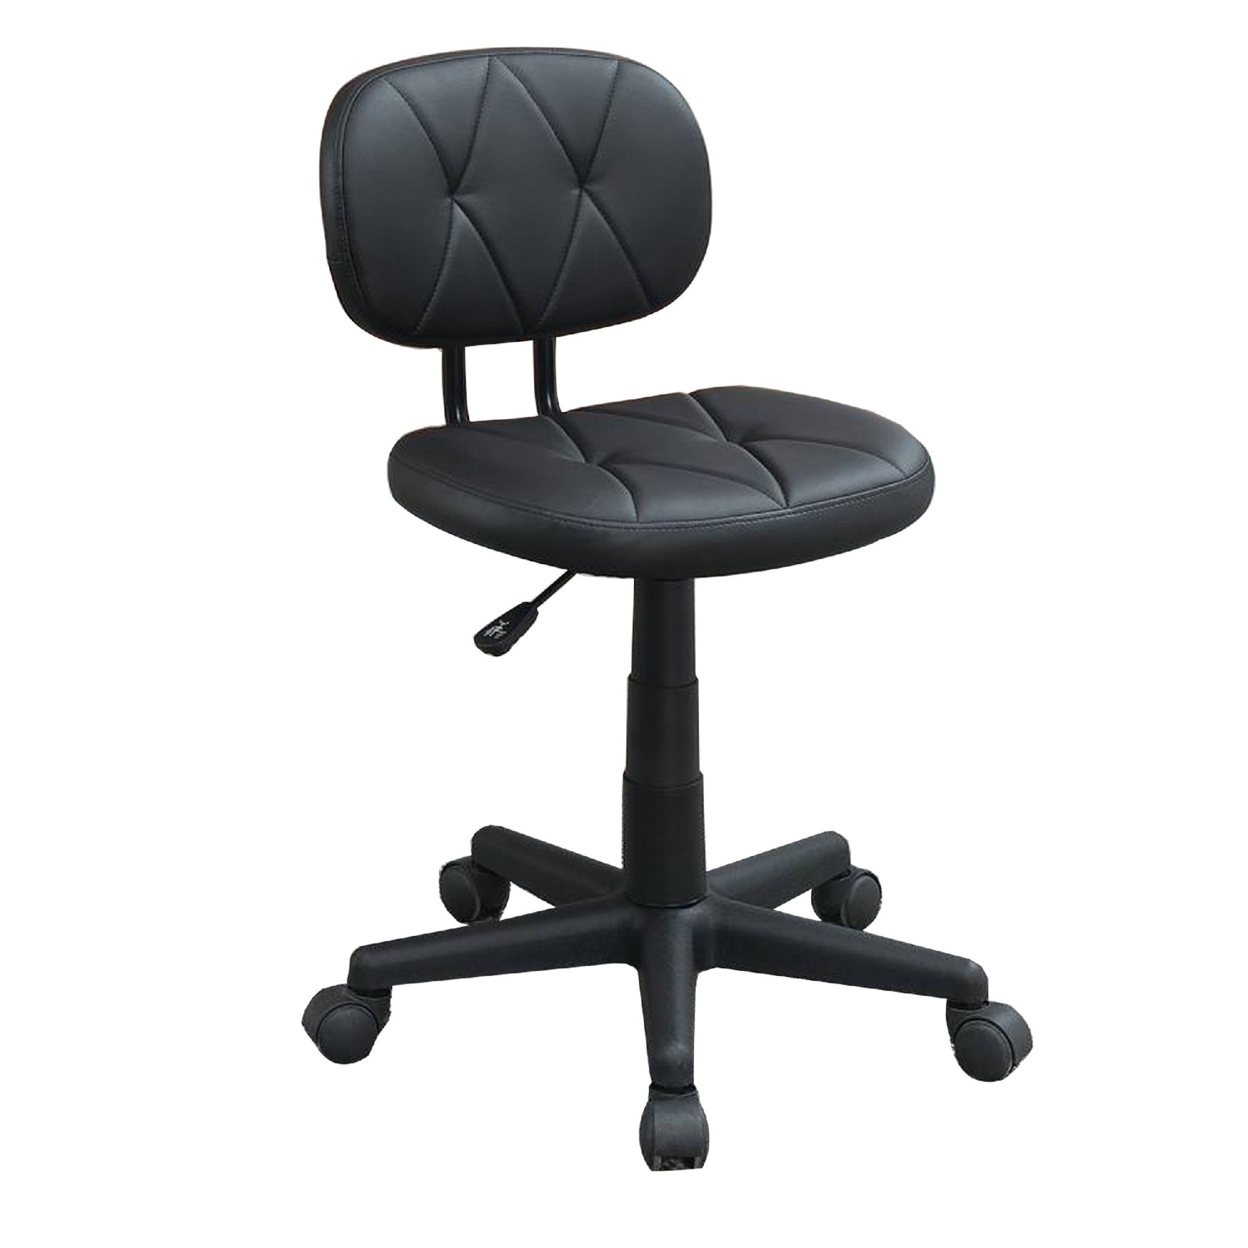 Office Chair With Adjustable Height And Diamond Stitch, Black- Saltoro Sherpi